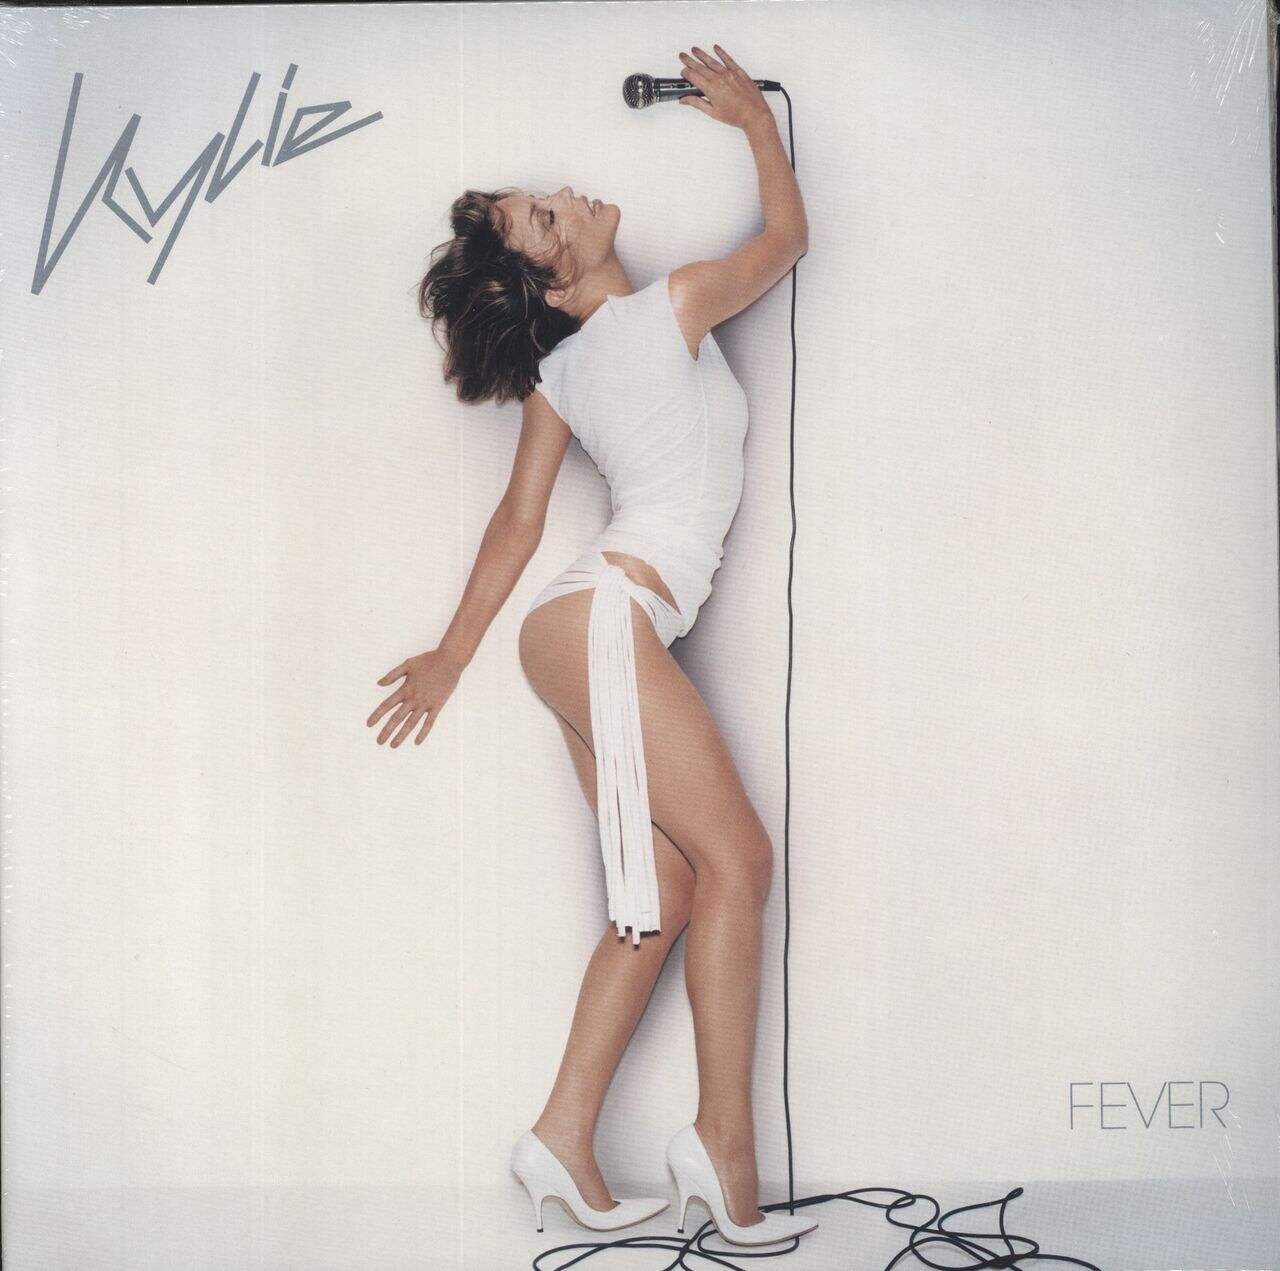 Kylie Minogue Fever: 21st Anniversary - Silver Vinyl - Sealed UK Vinyl LP